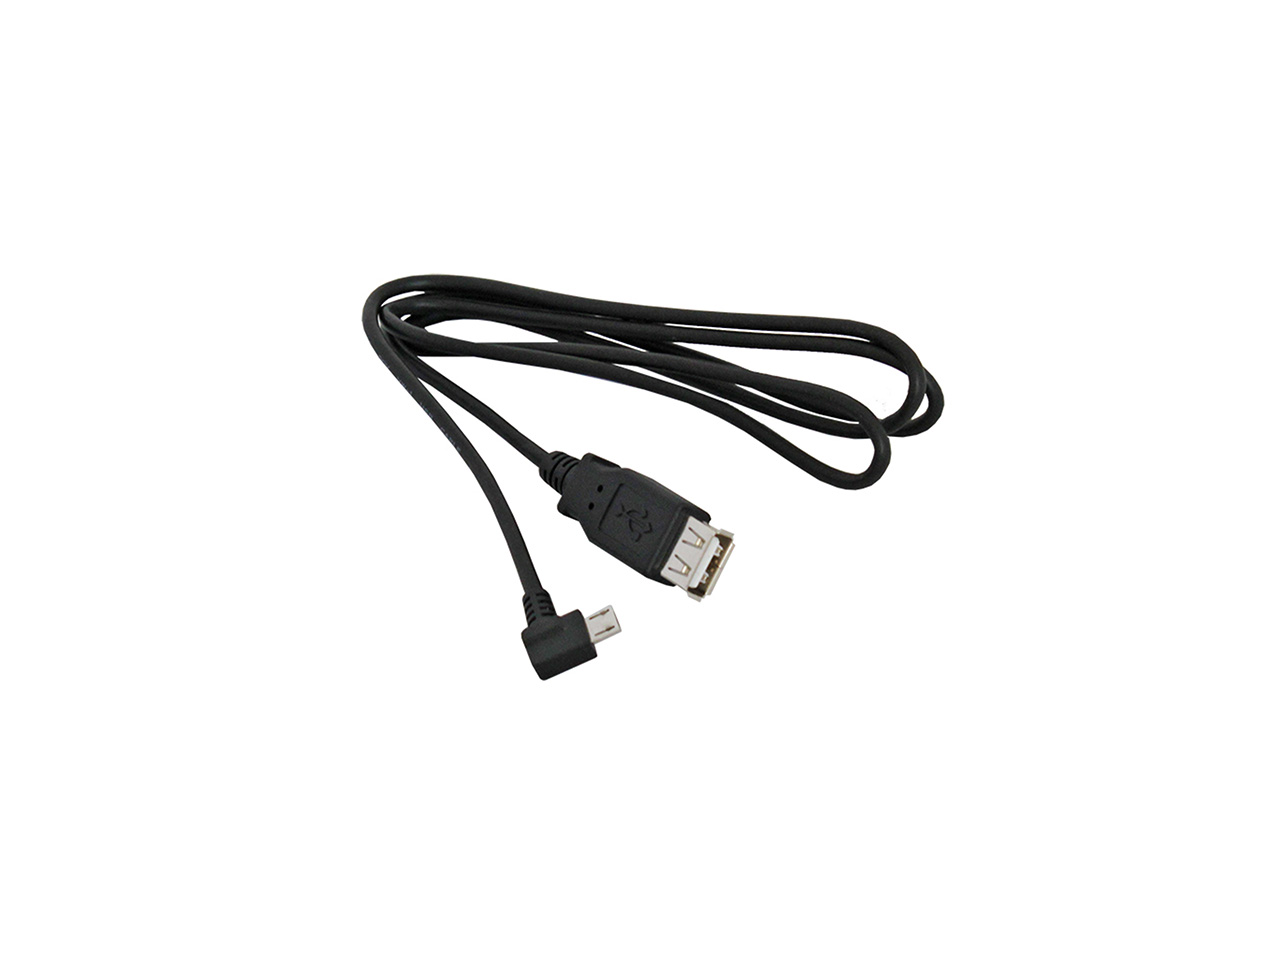 NX-1051 USB Cable.jpg